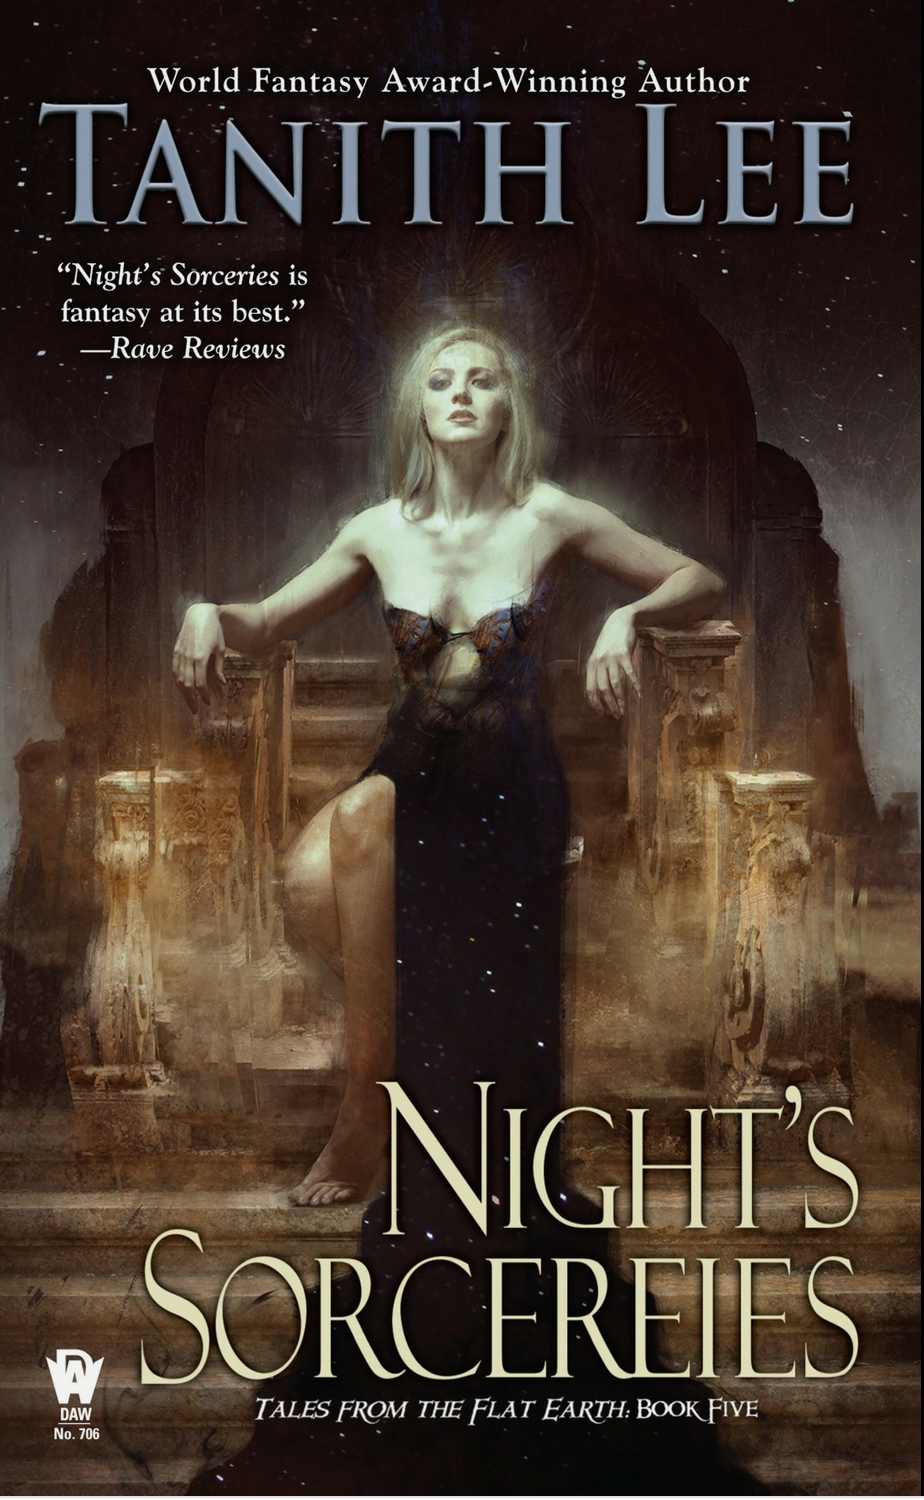 Tanith Lee: Night's Sorceries (1987)